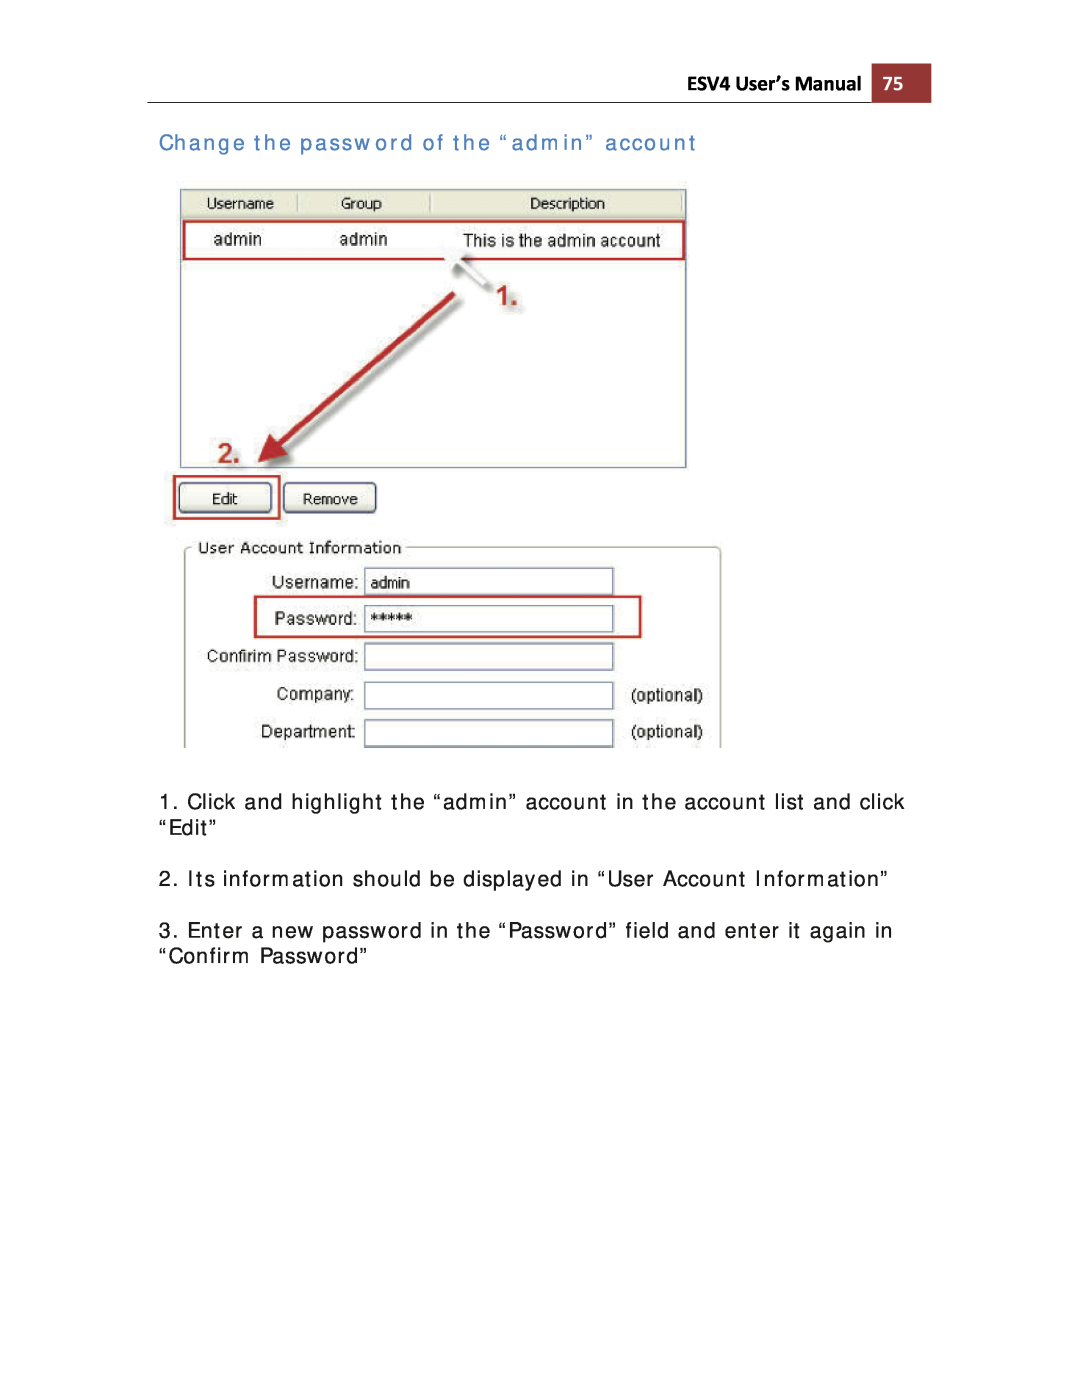 Toshiba ESV41T user manual Change the password of the “admin” account, ESV4 User’s Manual 